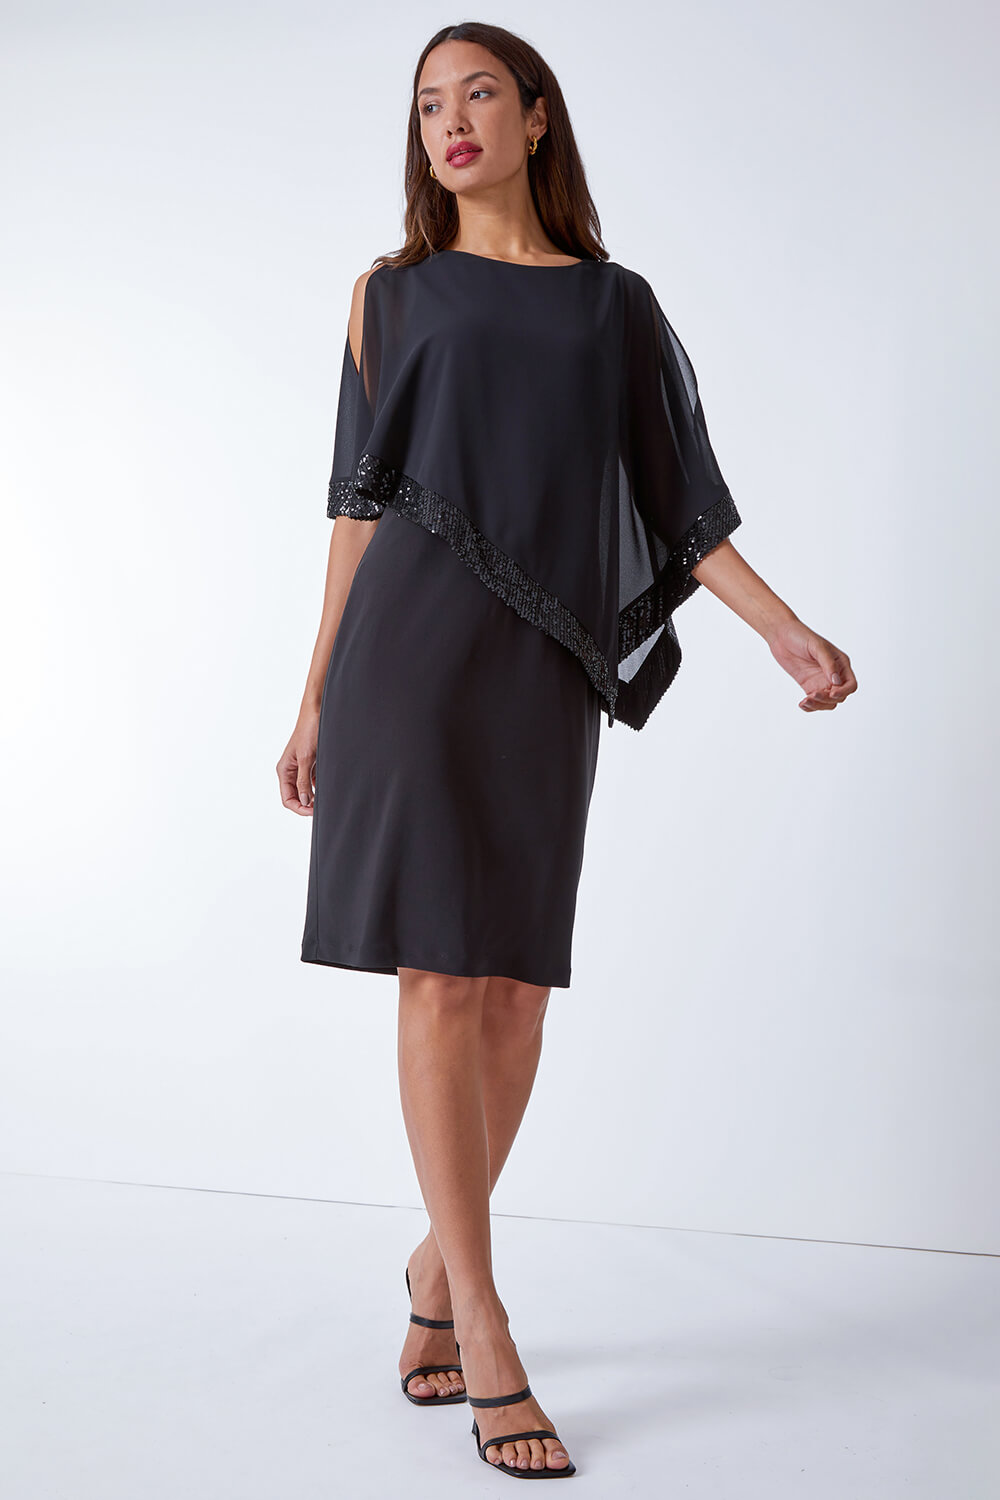 Black Sequin Trim Asymmetric Chiffon Overlay Dress, Image 2 of 5